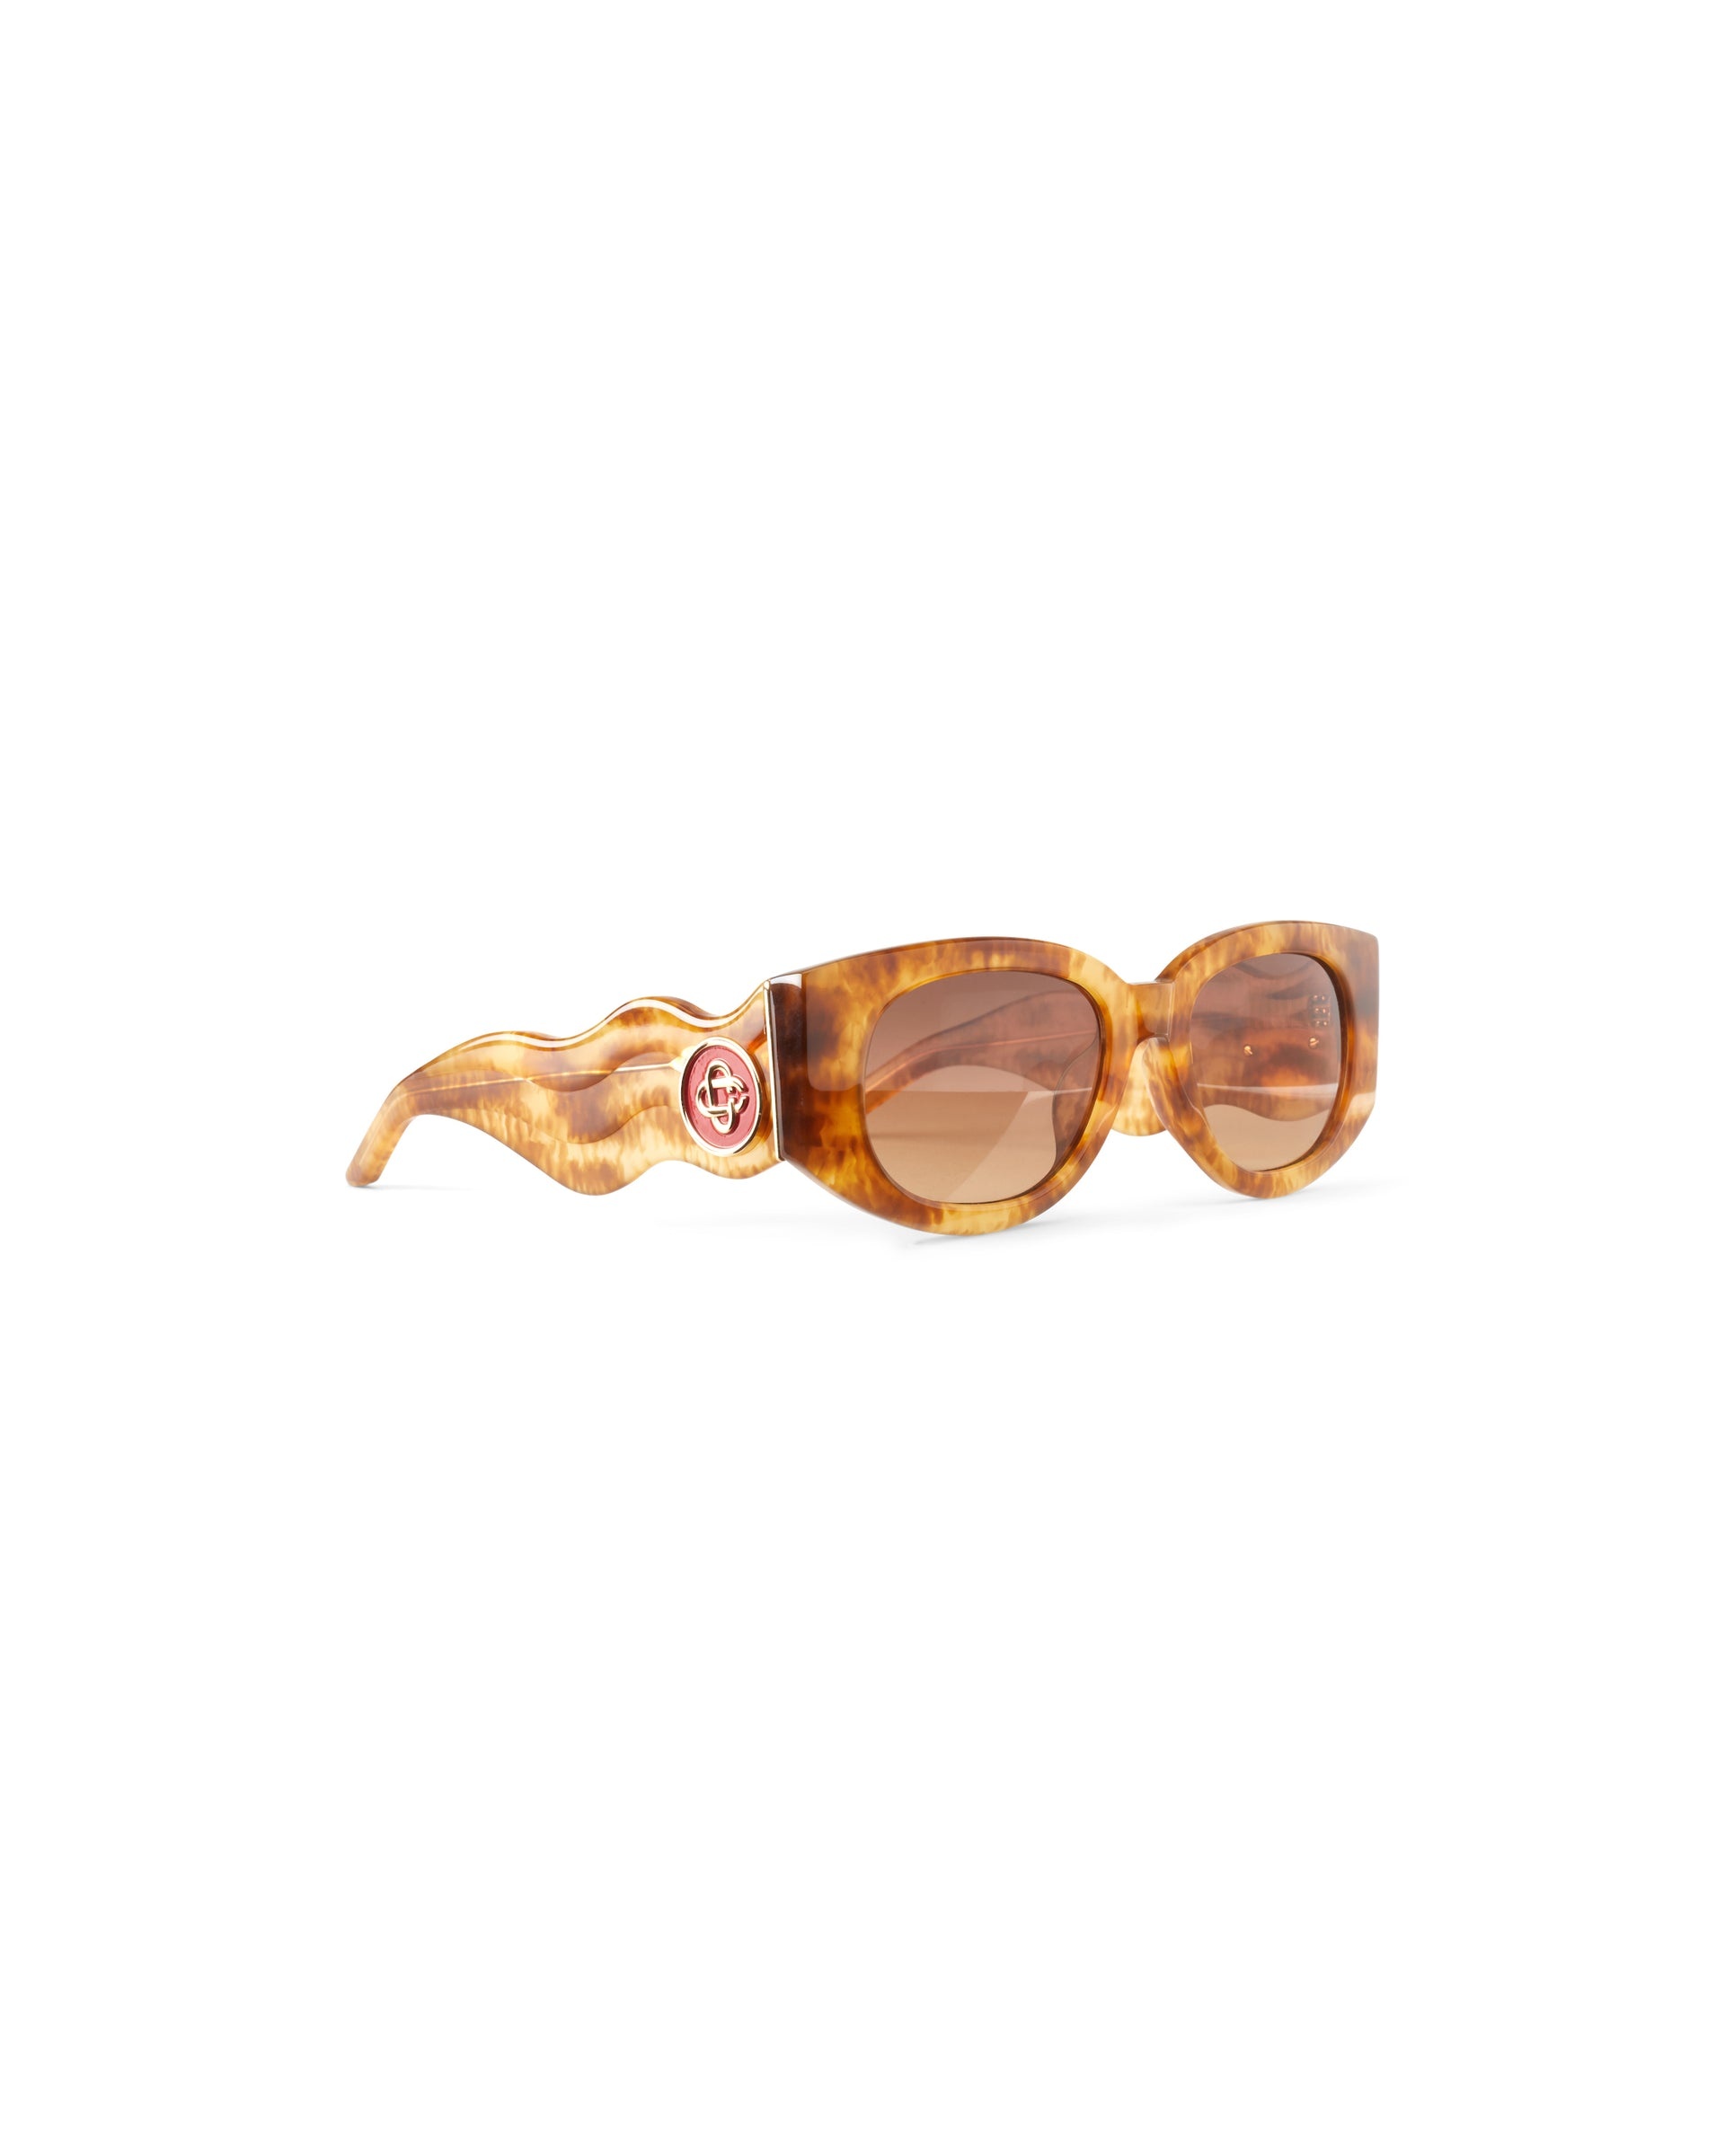 Memphis Gold & Brown Sunglasses - 1